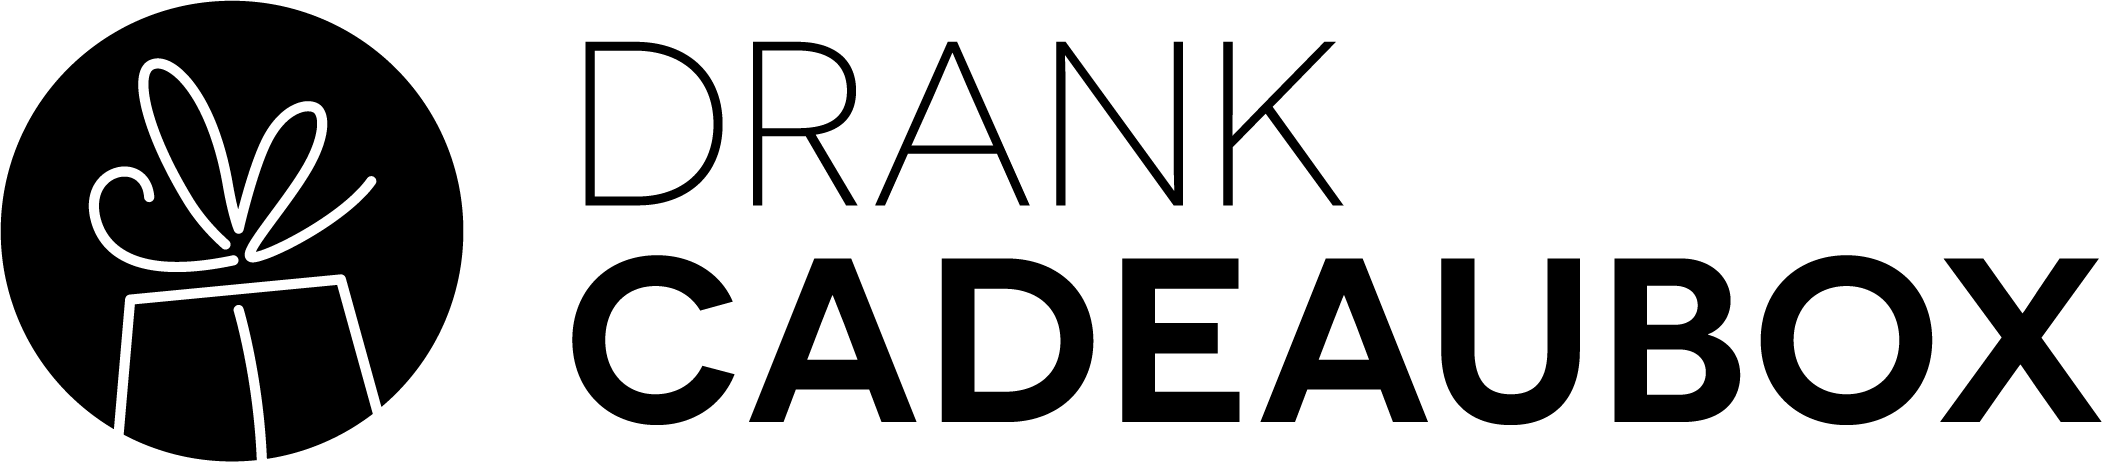 Drank cadeaubox logo